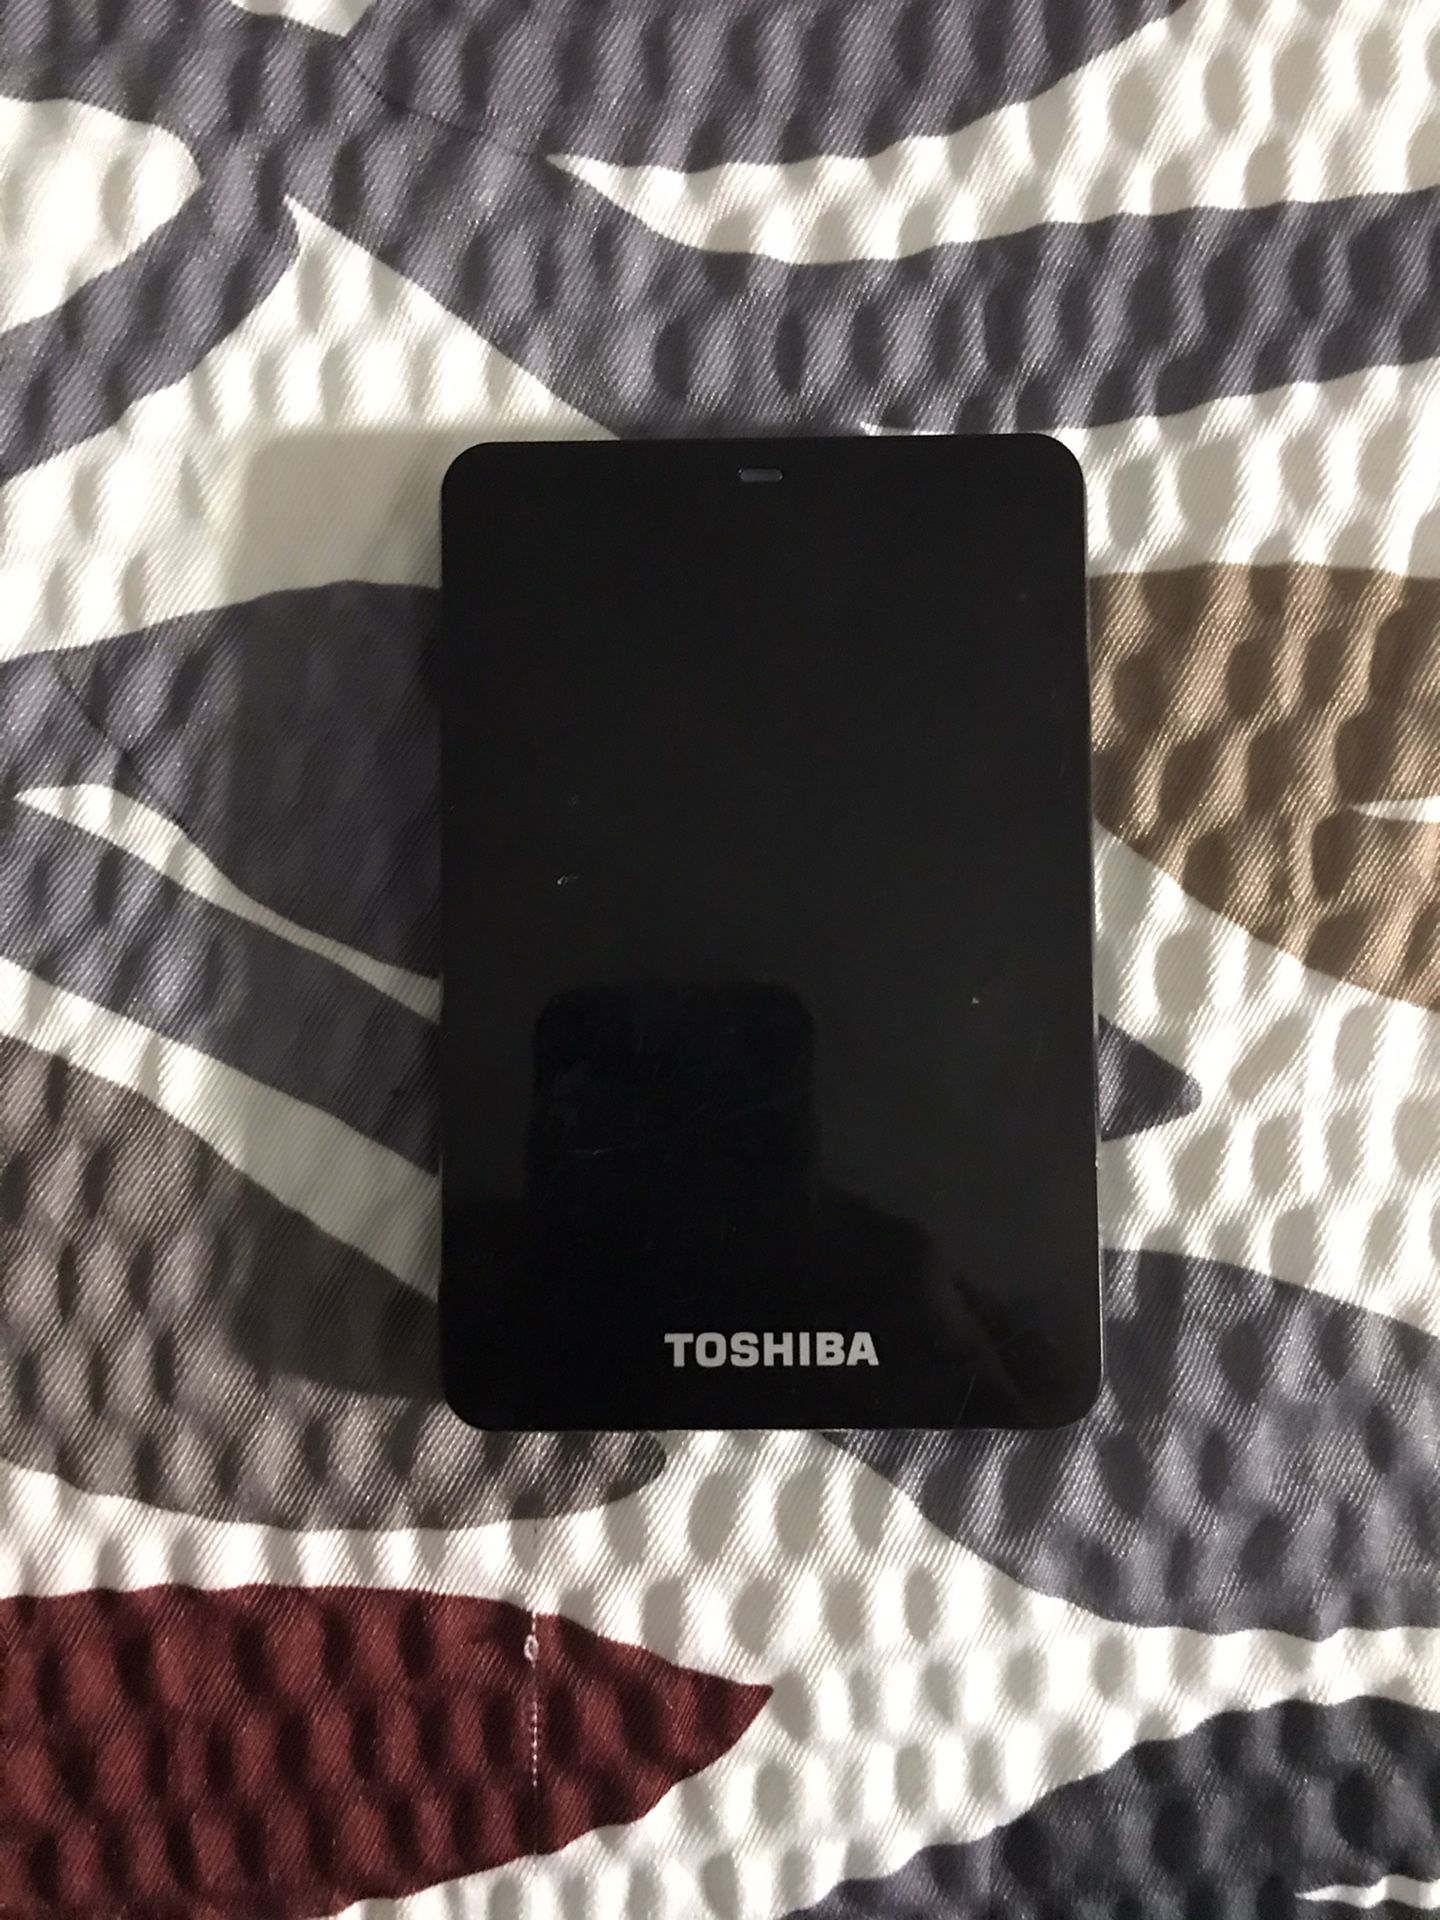 TOSHIBA 1TB USB 3.0 EXTERNAL HARD DRIVE